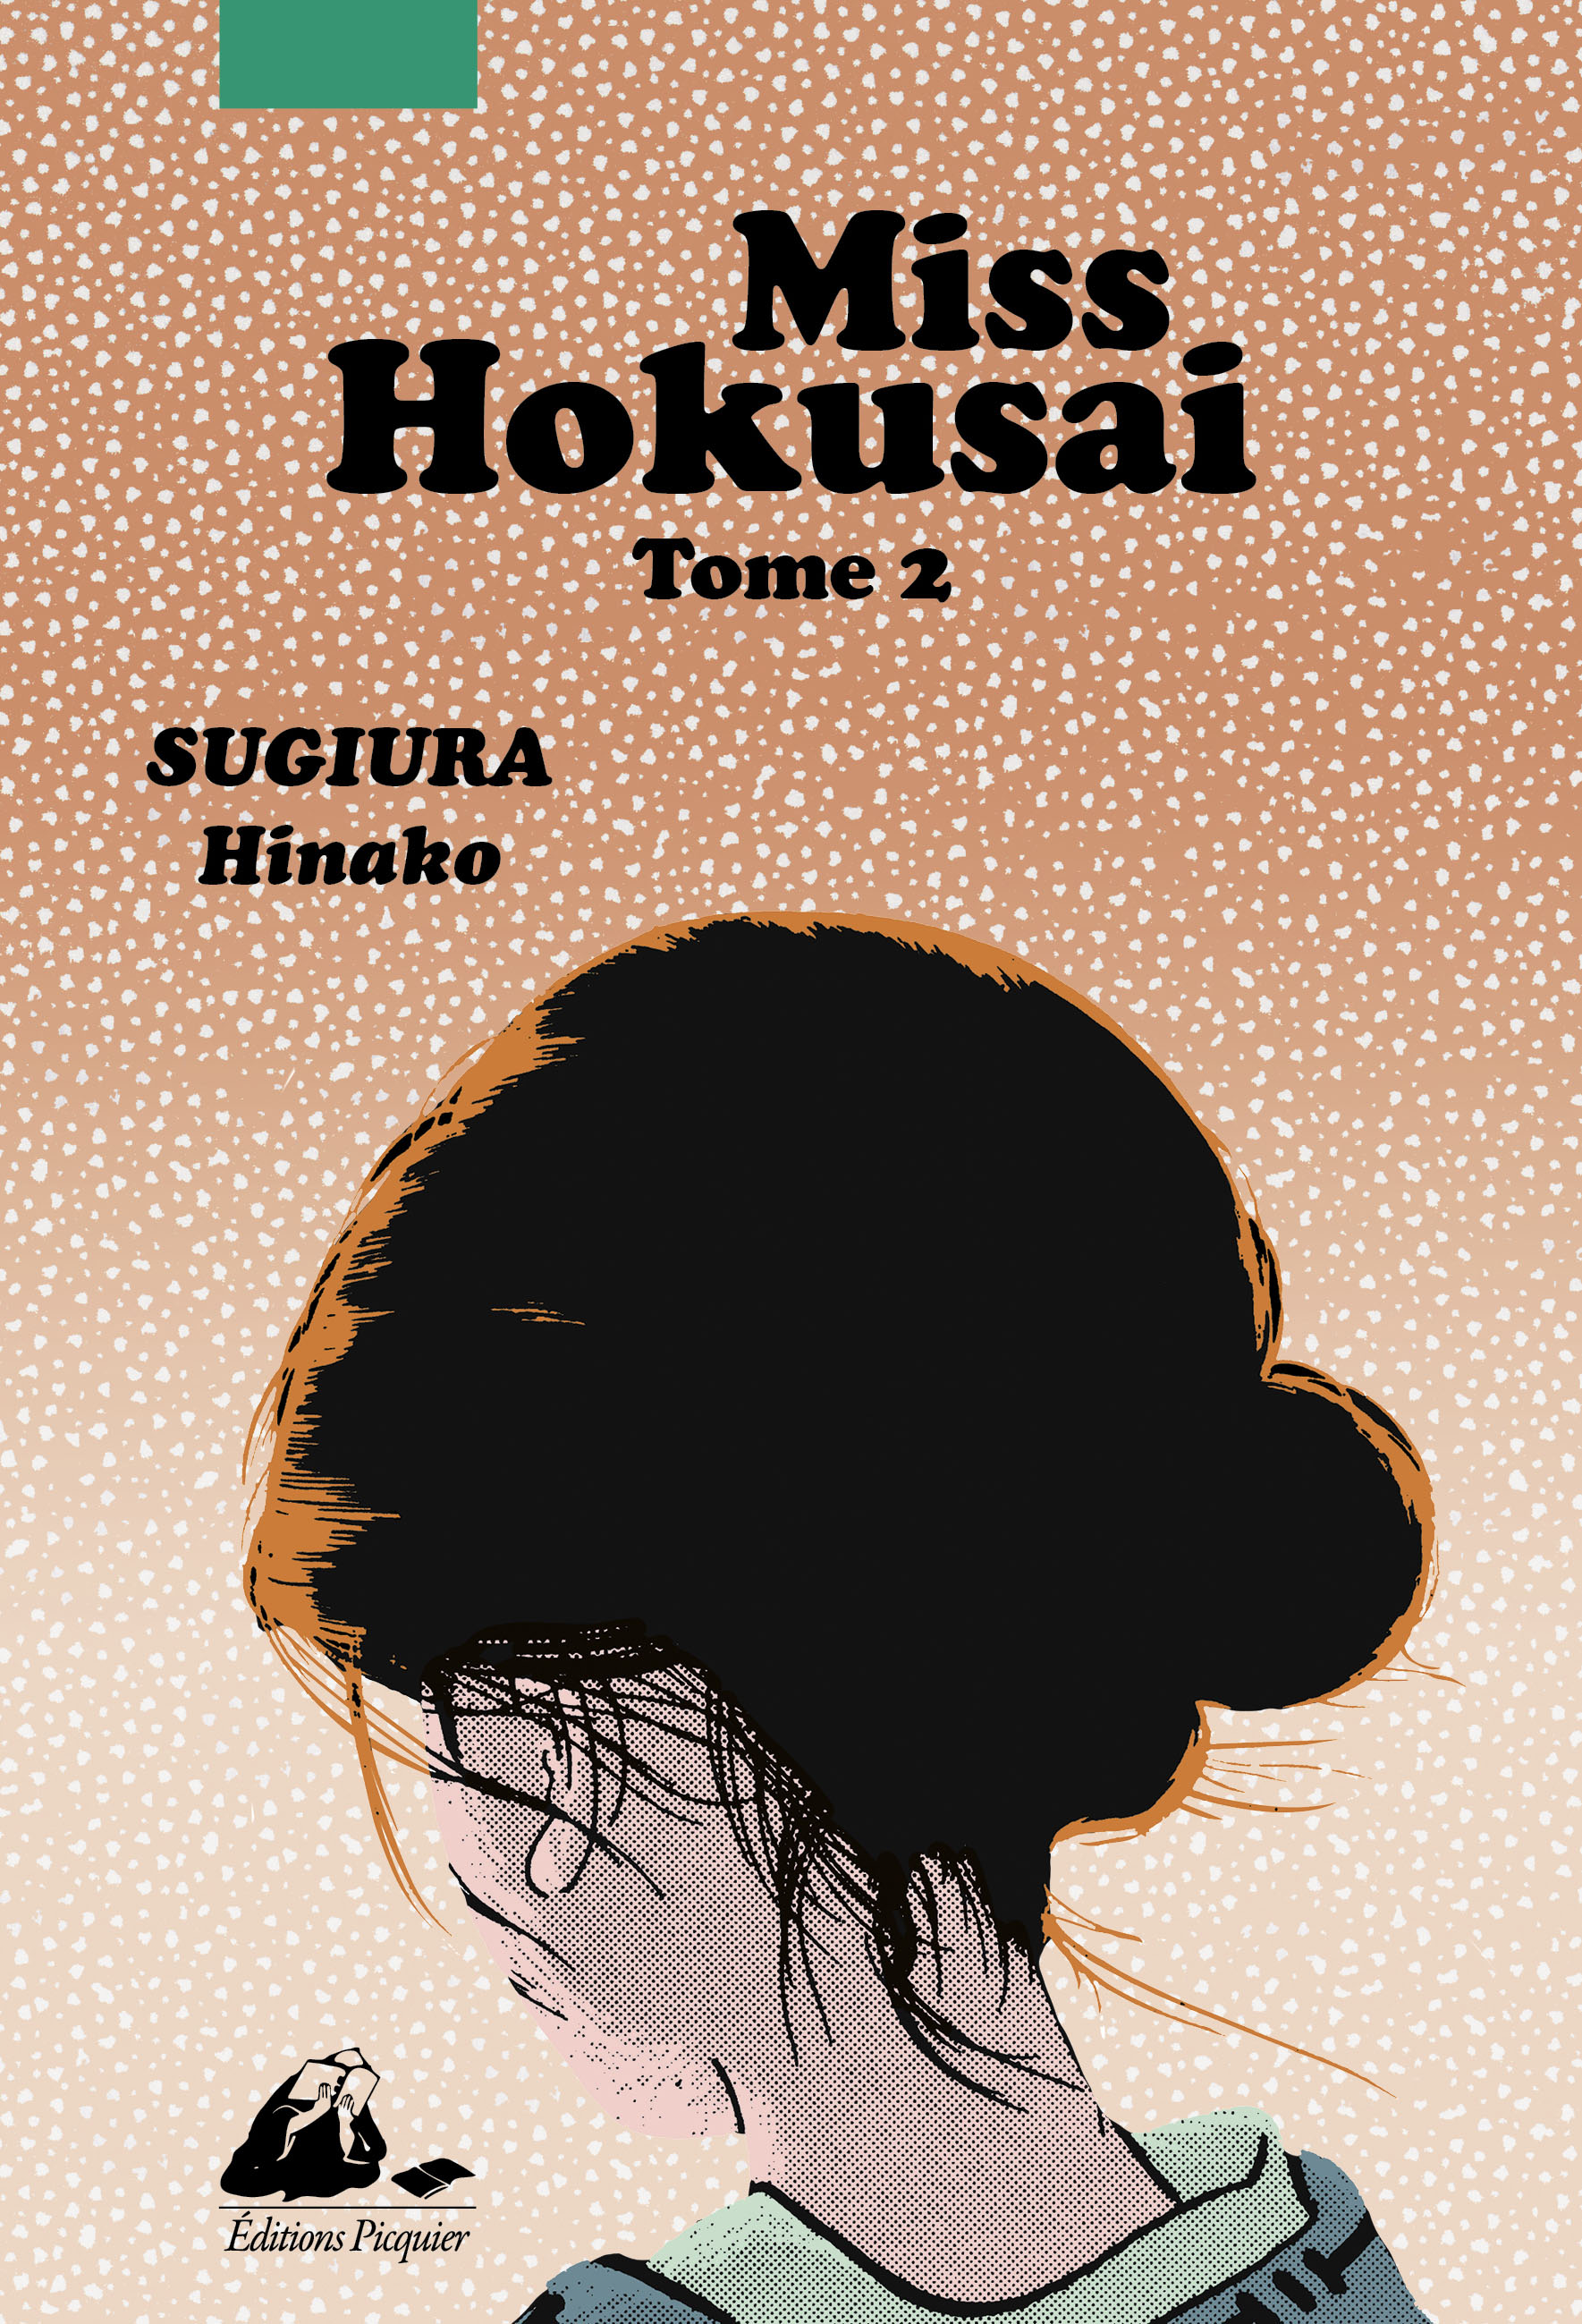 Les 2 tomes du manga Miss Hokusai de Sugiura Hinako sont édités chez Picquier.